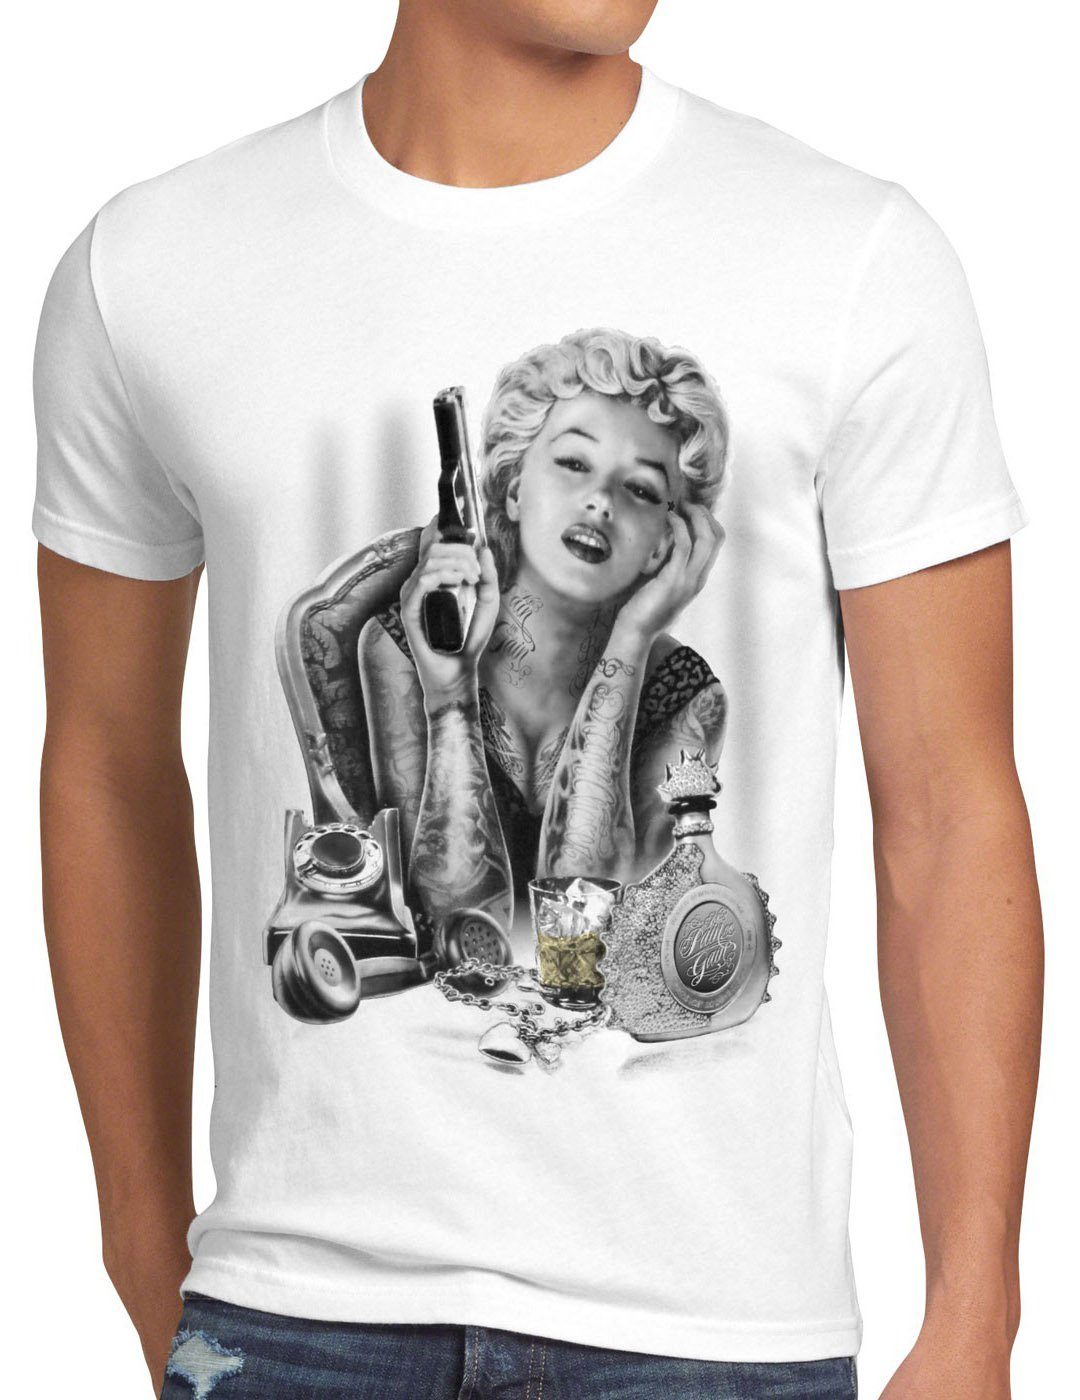 us monroe punk Herren T-Shirt rock Tattoo Marilyn style3 Print-Shirt marylin tätowiert Heartbreaker weiß